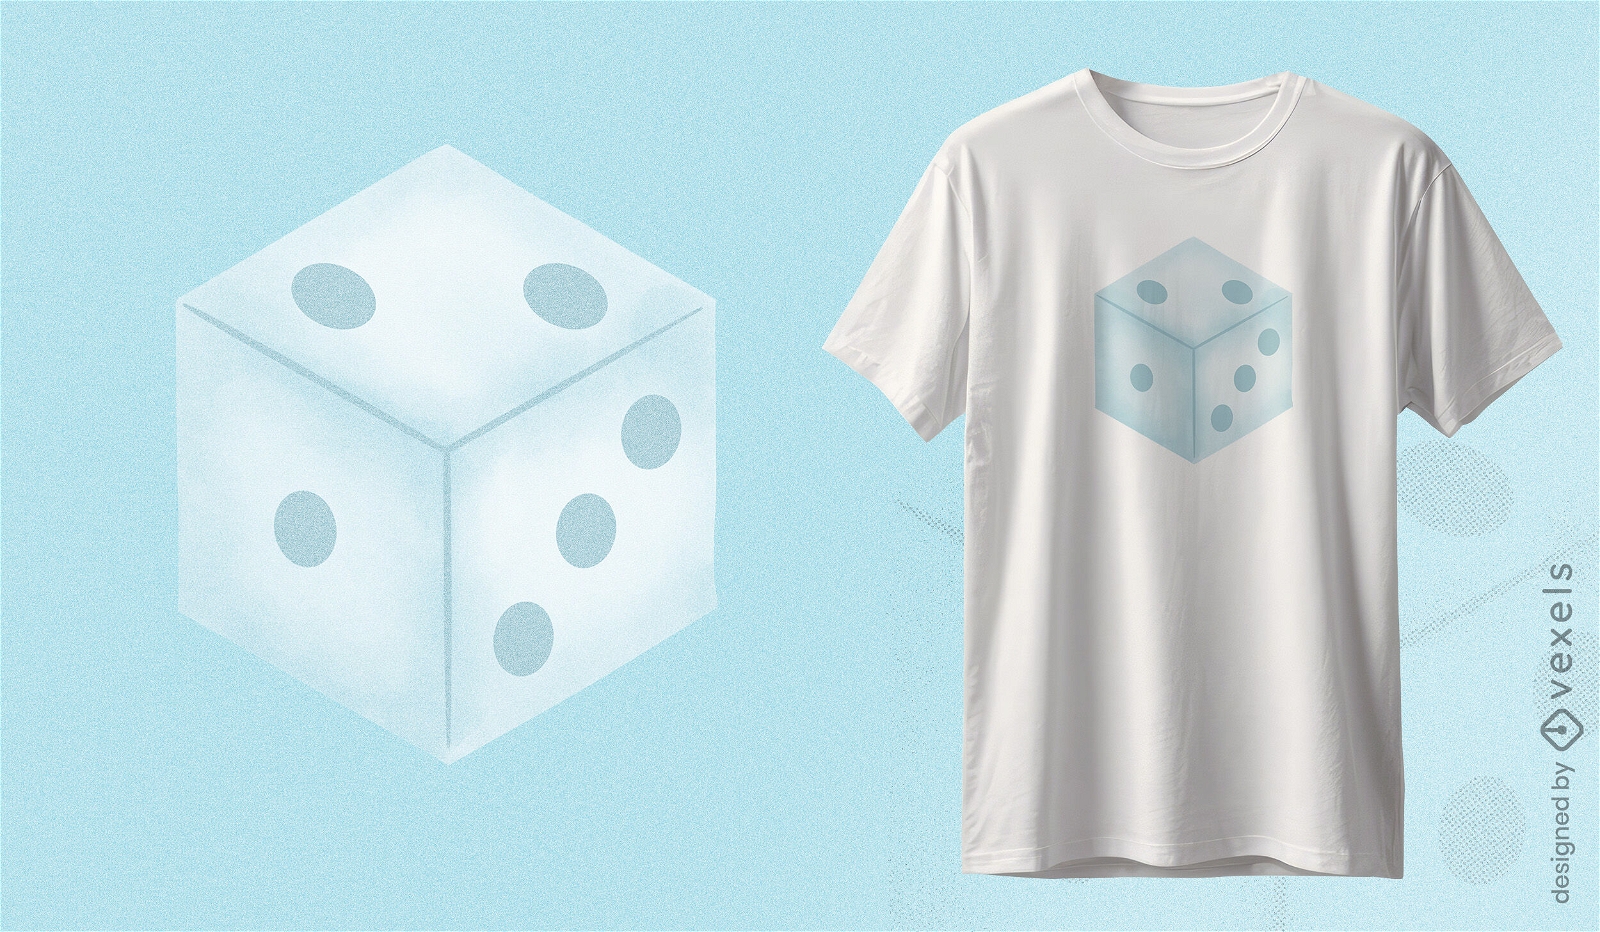 Ice dice t-shirt design